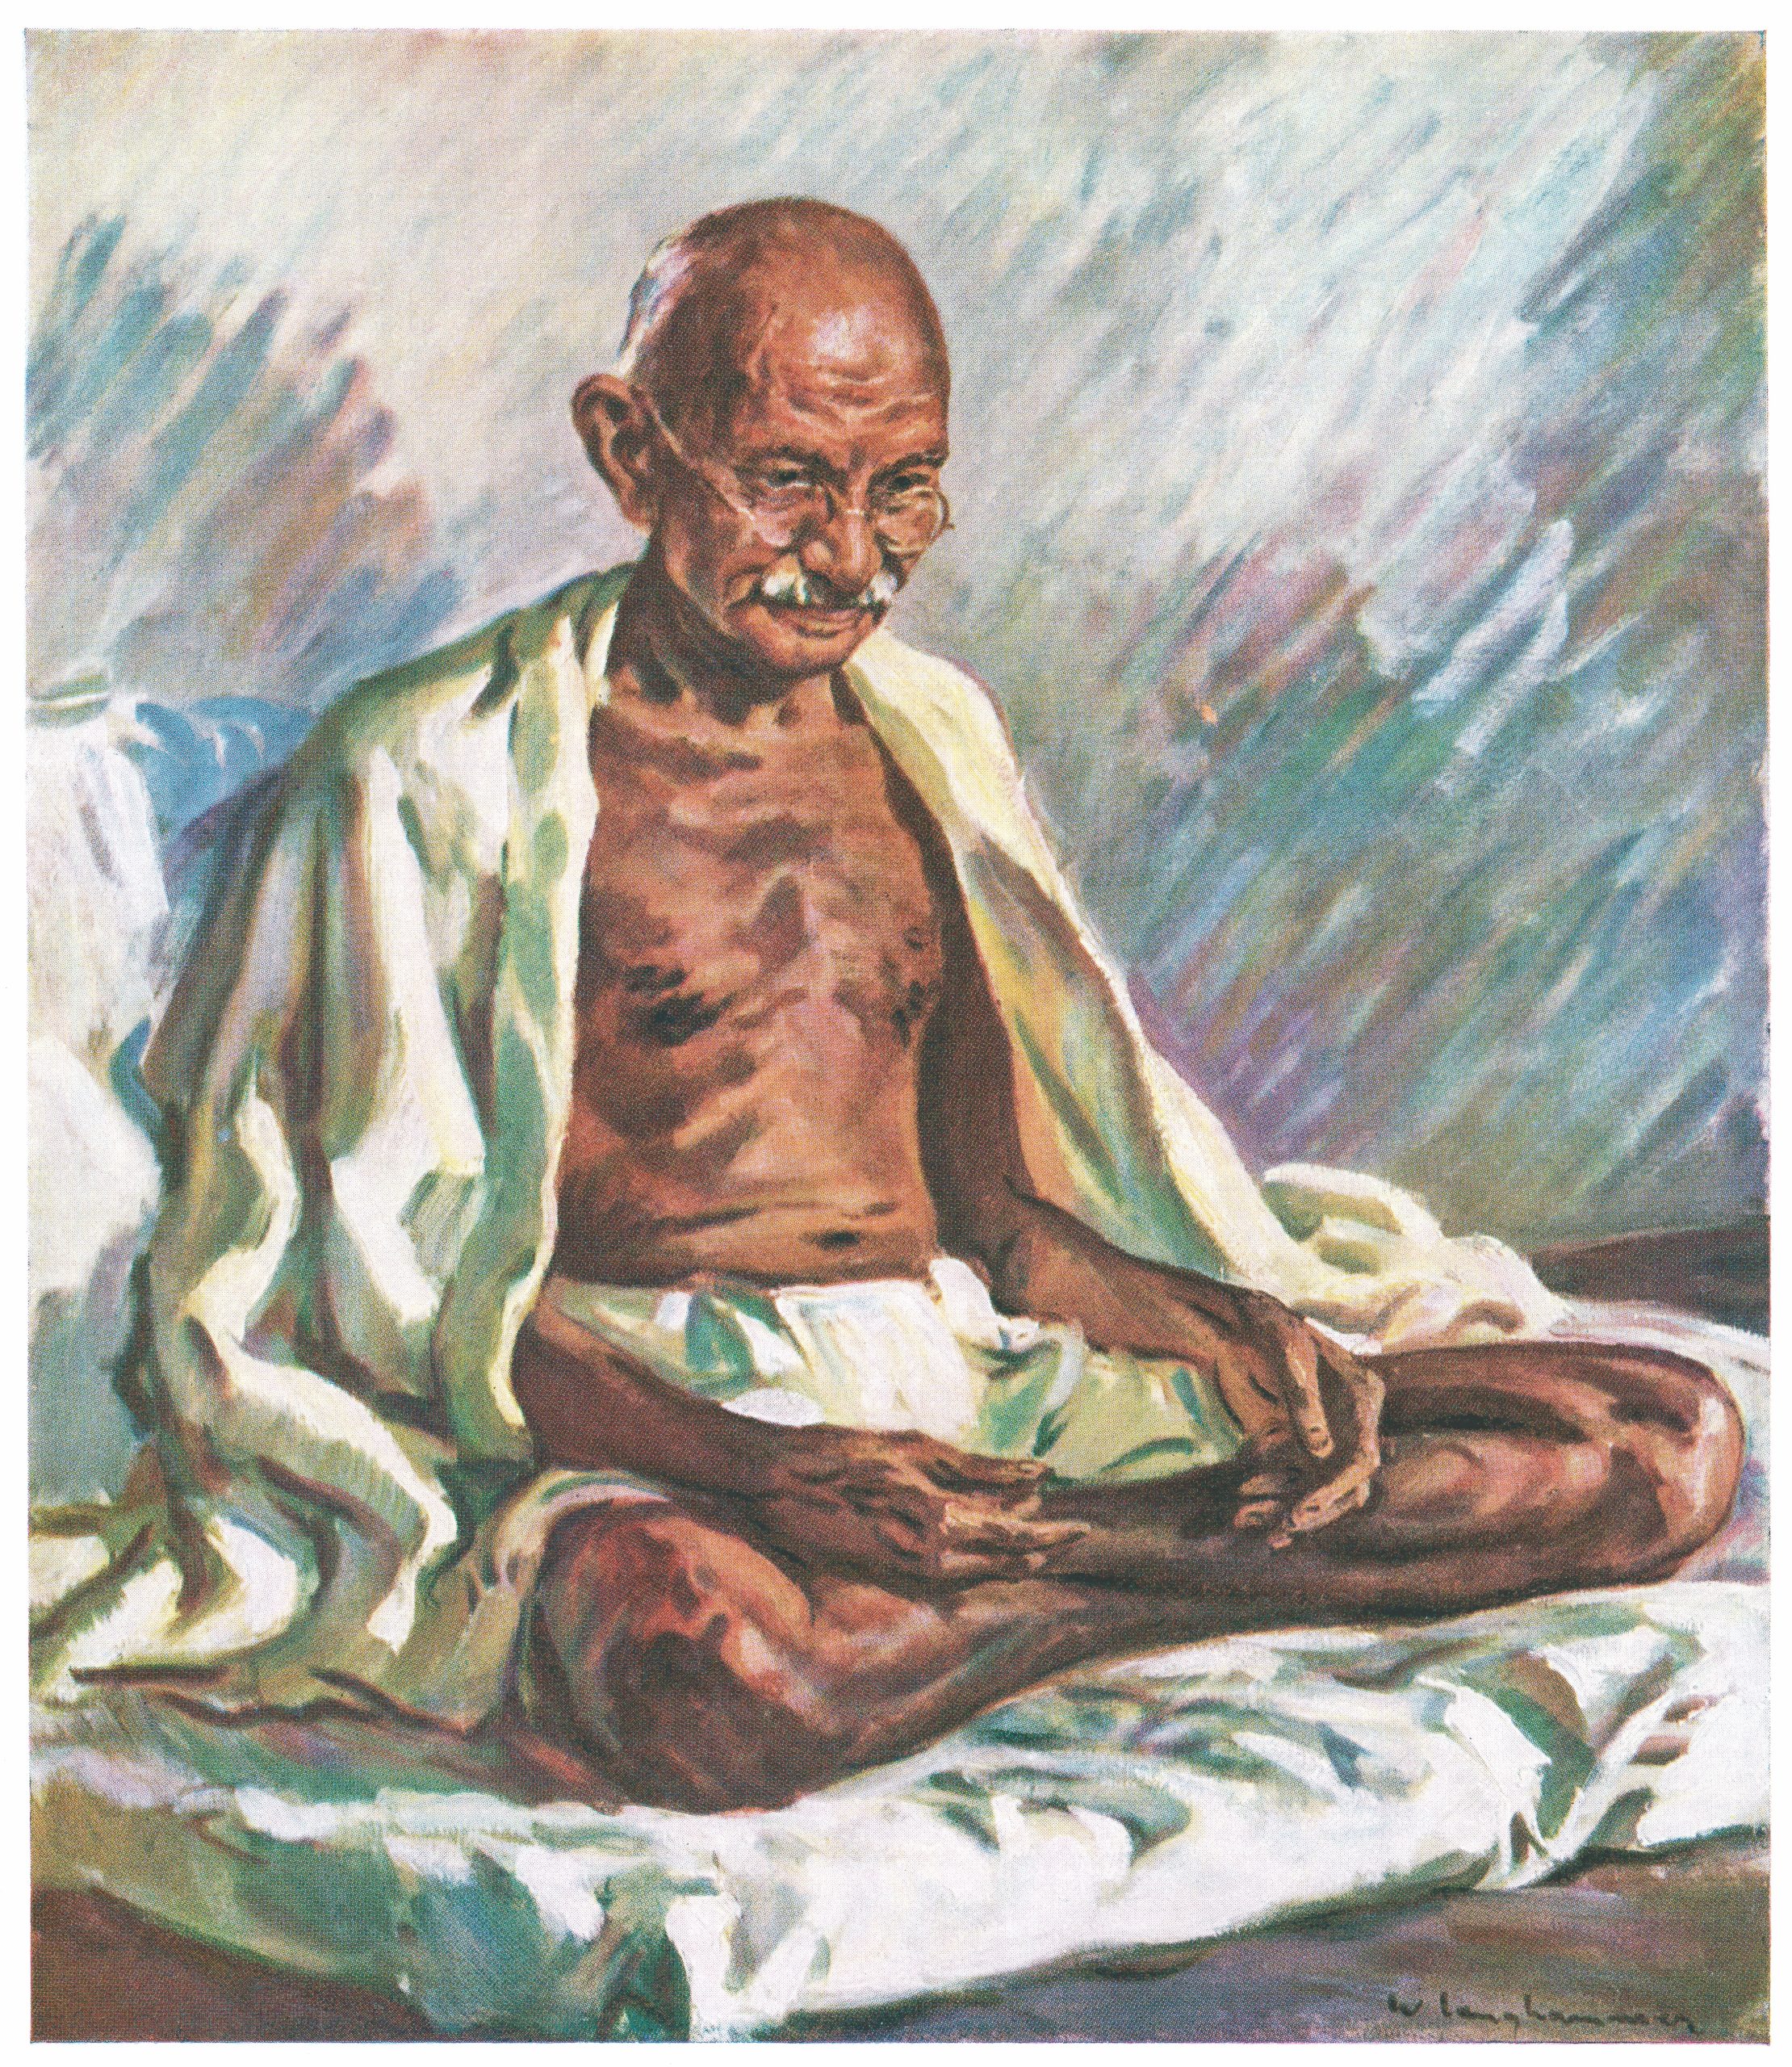 Portrait of Mahatma Gandhi sitting cross-legged, 1947. Screen print. (Illustration by GraphicaArtis/Getty Images)